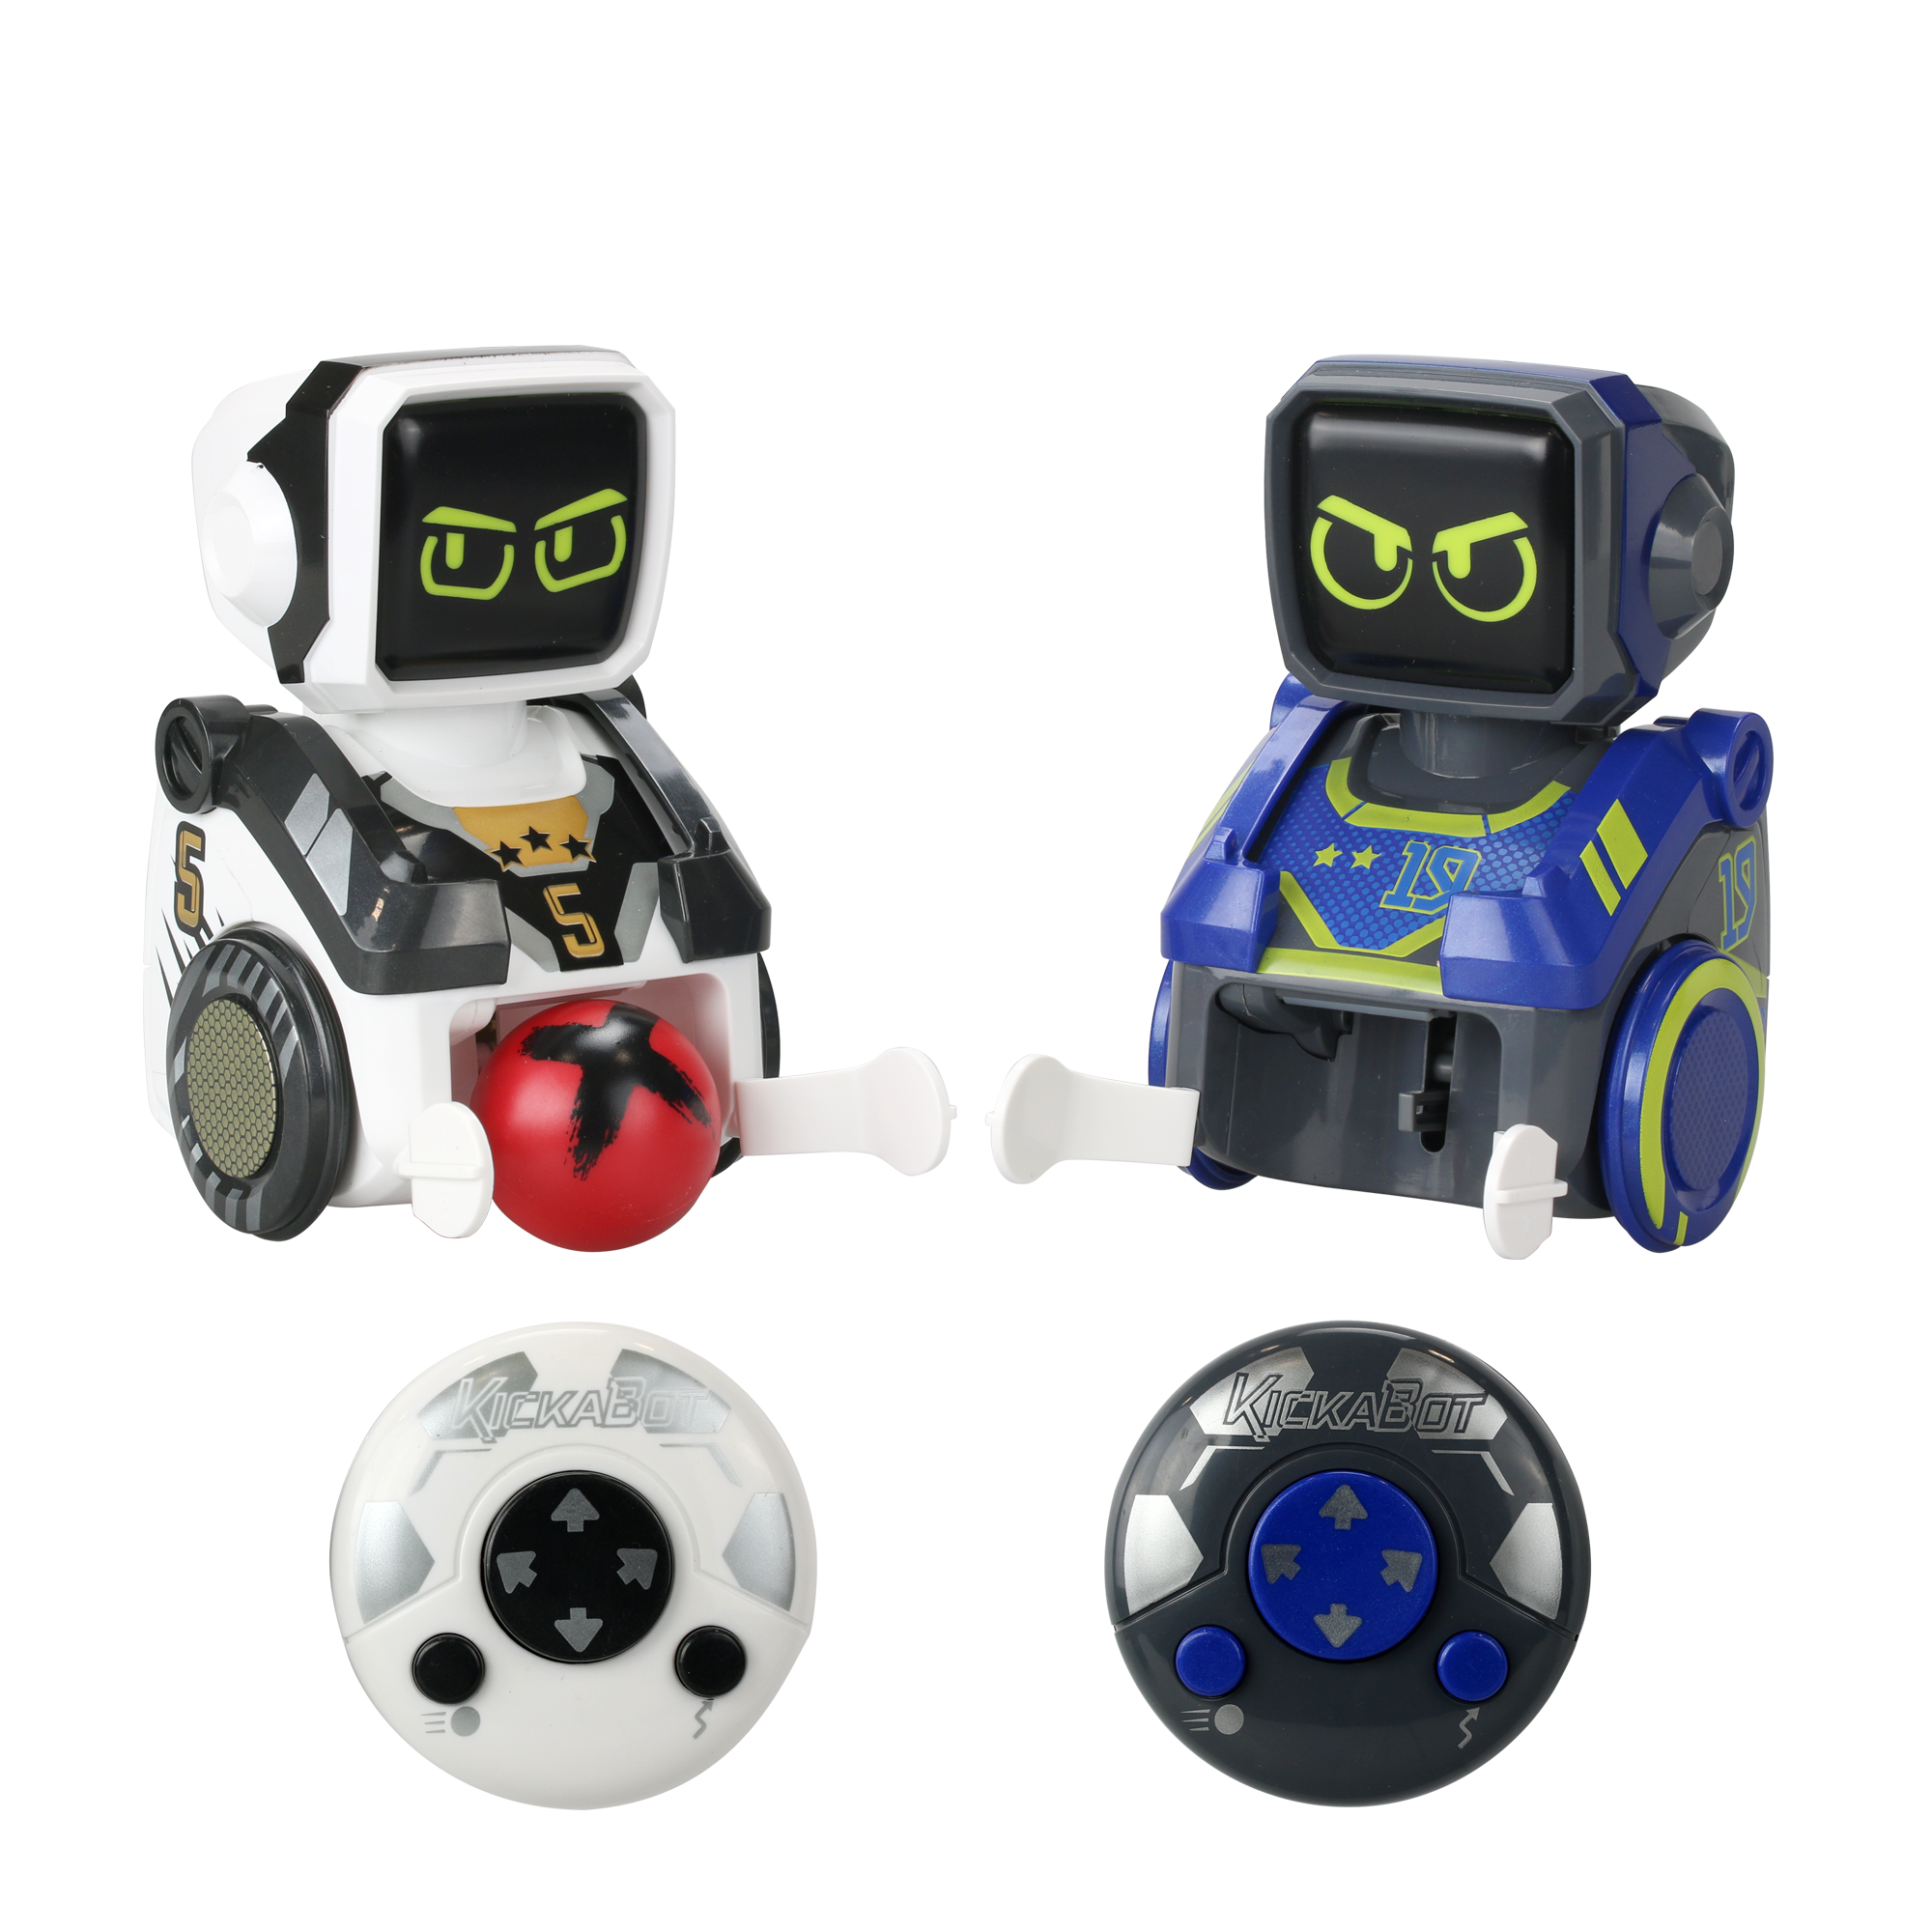 Jual RC Battling Robot Robo Kombat Silverlit Battle with AI